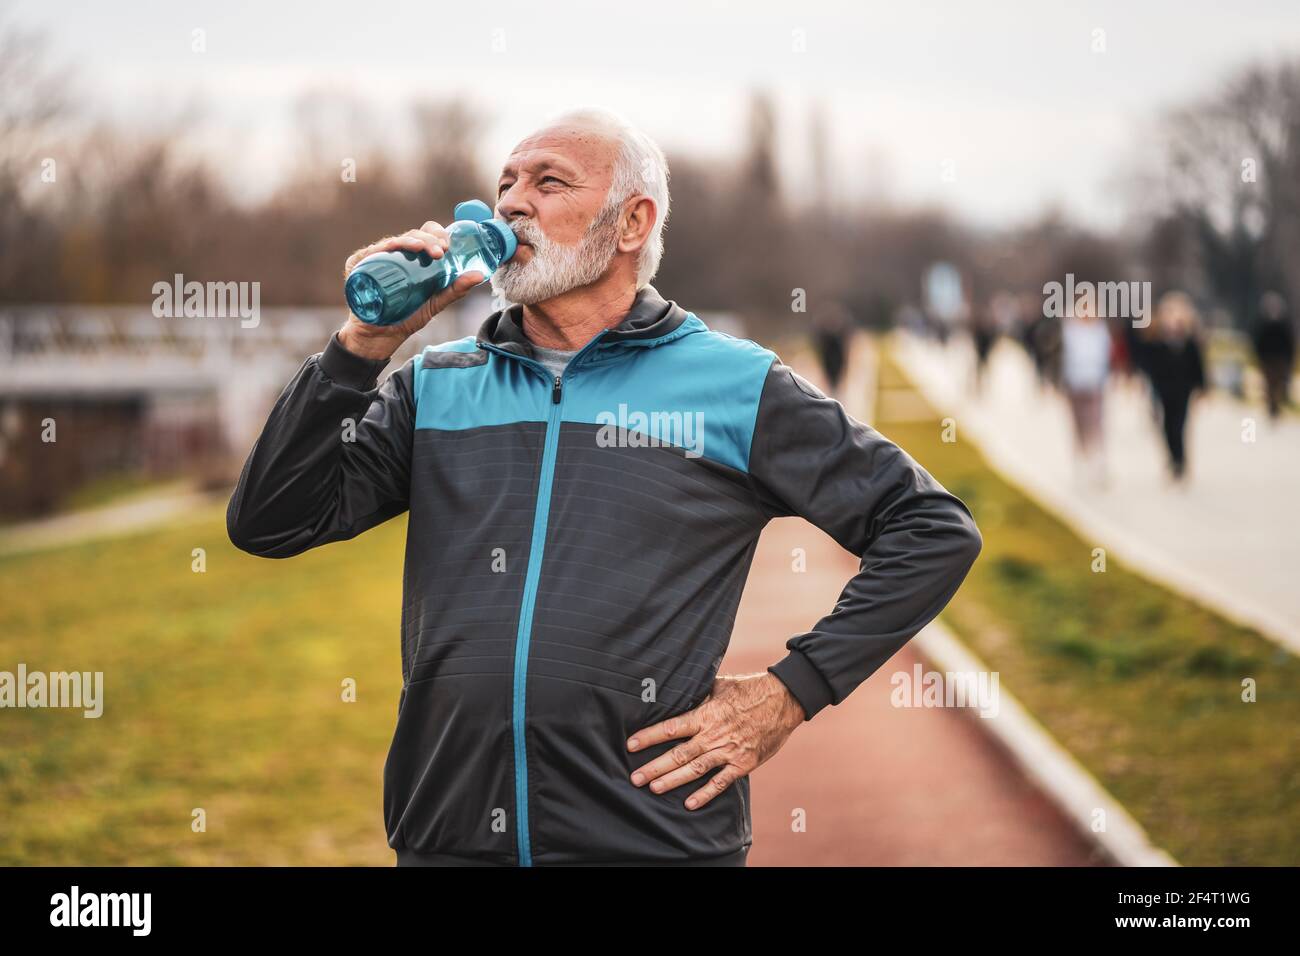 Aktiver älterer Mann trinkt nach dem Training Wasser. Gesunder Lebensstil. Stockfoto